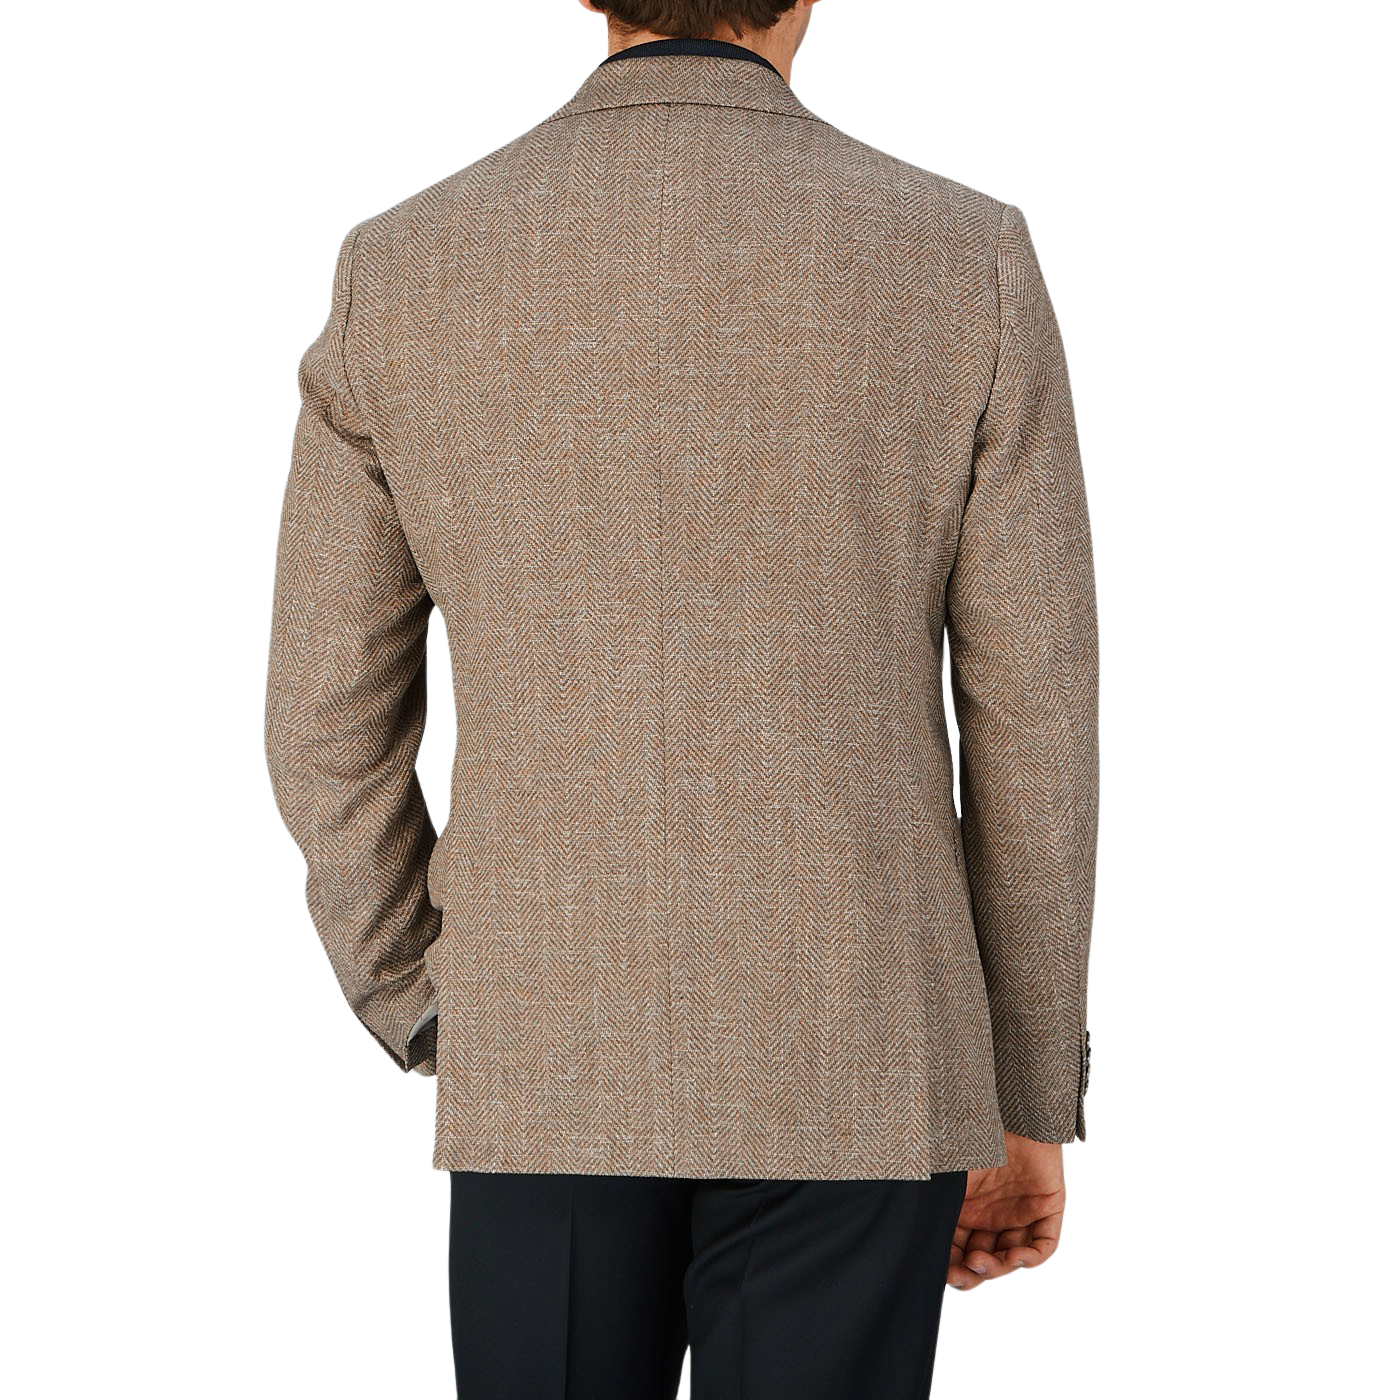 The back view of a man wearing a Eduard Dressler brown herringbone cotton-linen blend tan blazer.